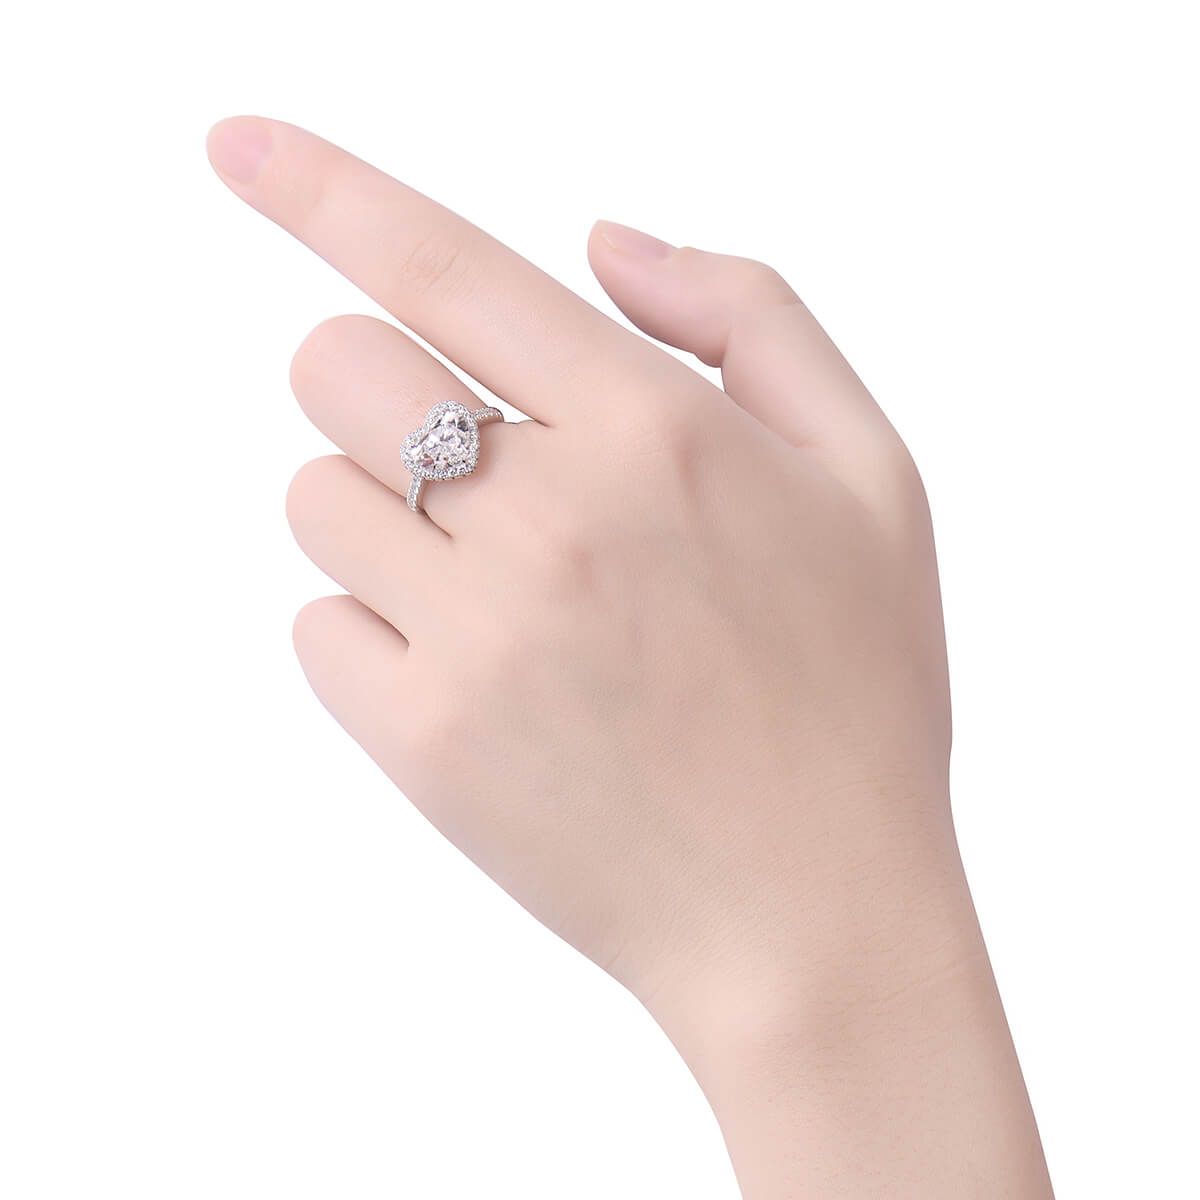  White Diamond Ring, 3.06 Ct. (3.63 Ct. TW), Heart shape, GIA Certified, 2141362089